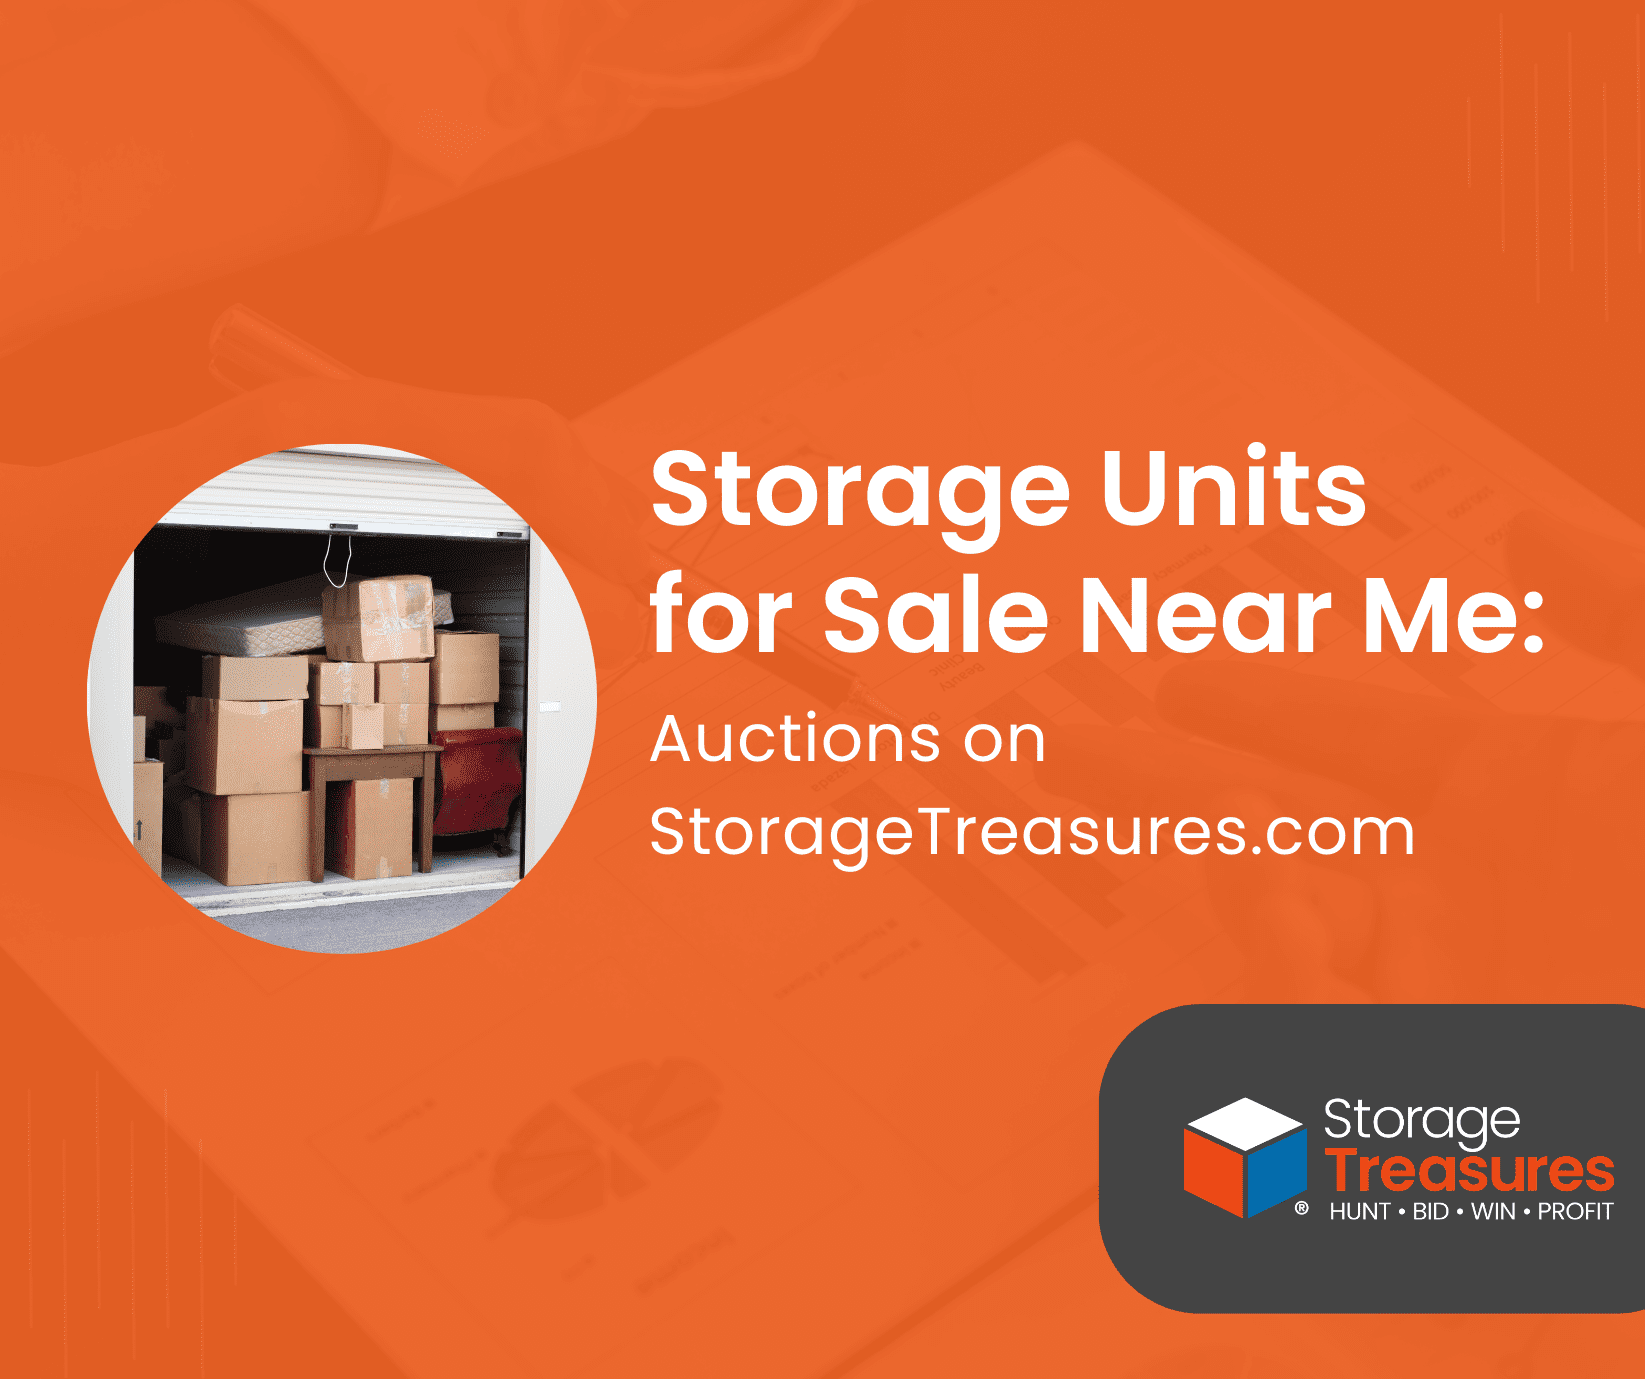 Storage units for sale near me